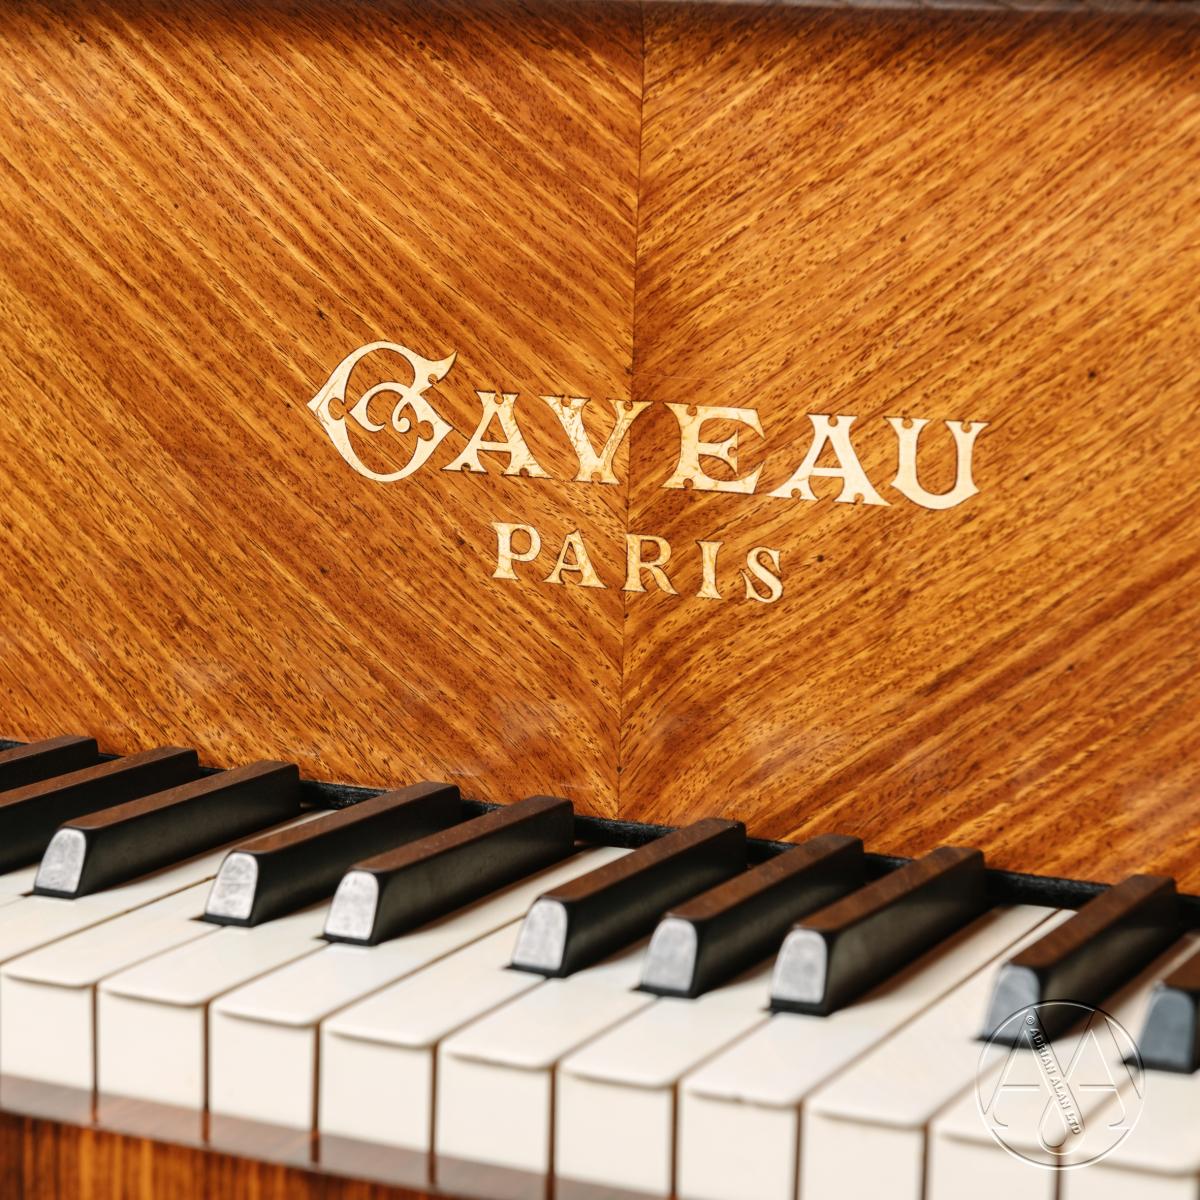 Baby Grand Piano by Gaveau à Paris